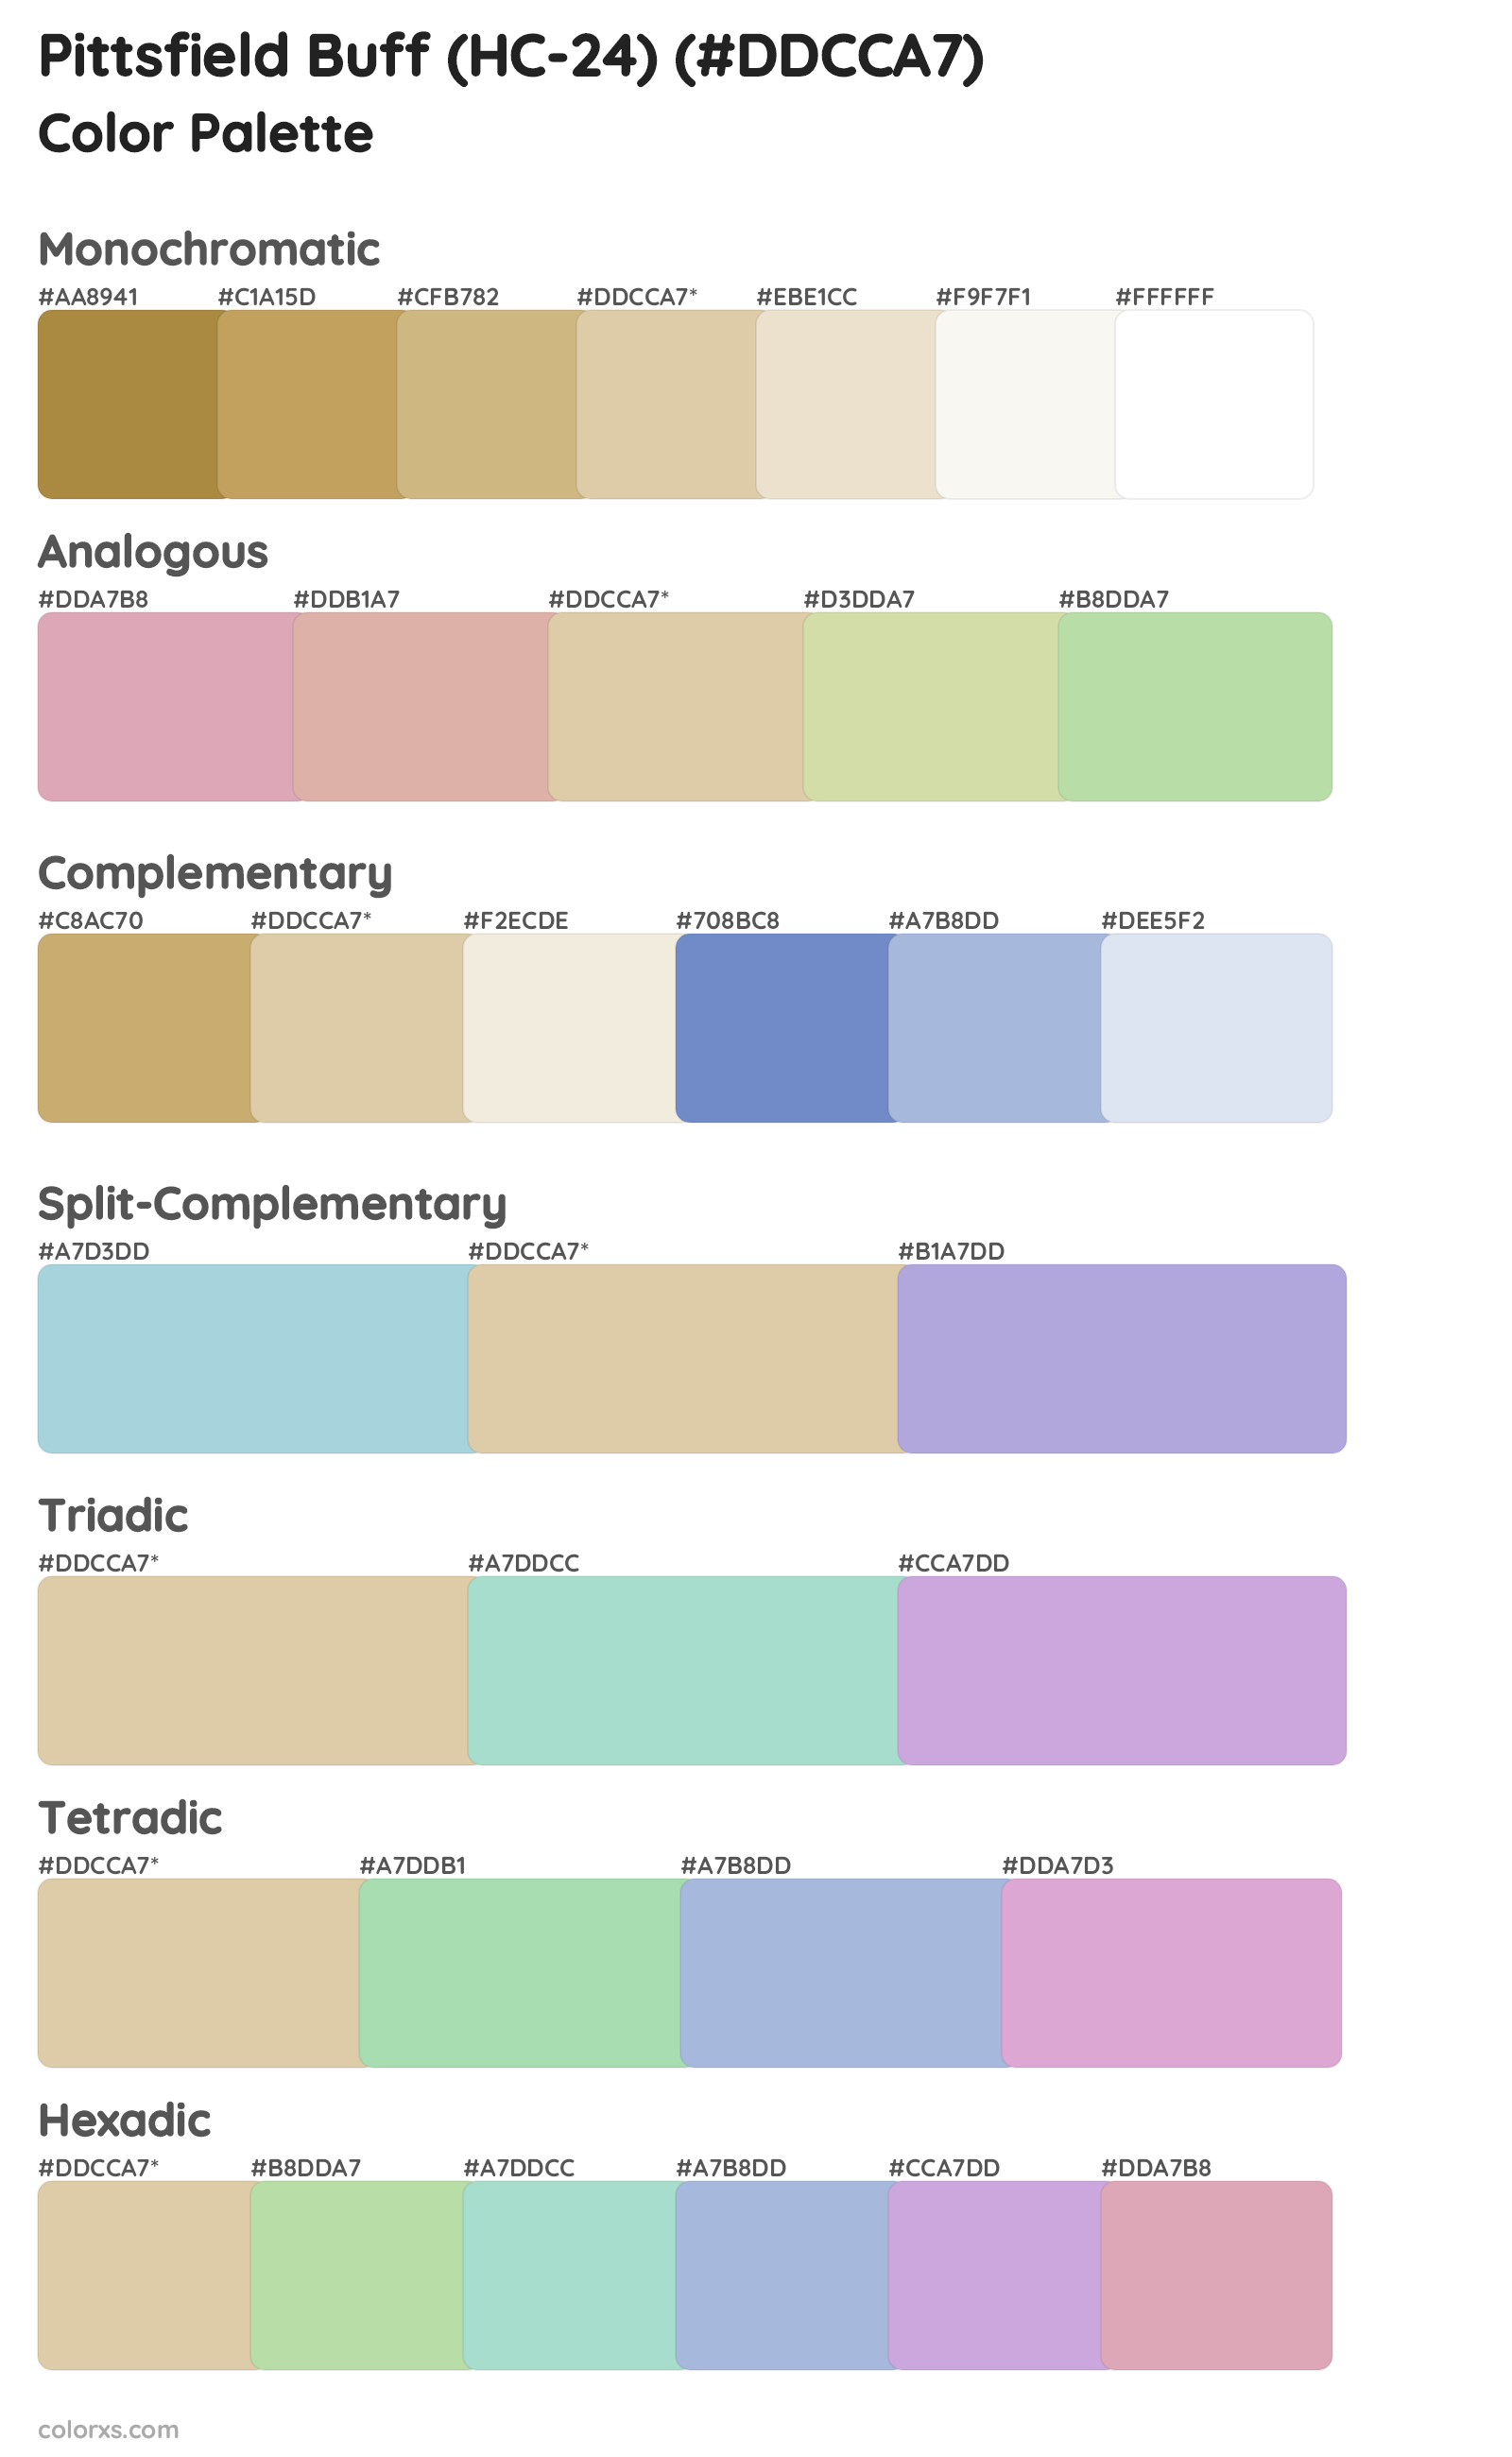 Pittsfield Buff (HC-24) Color Scheme Palettes